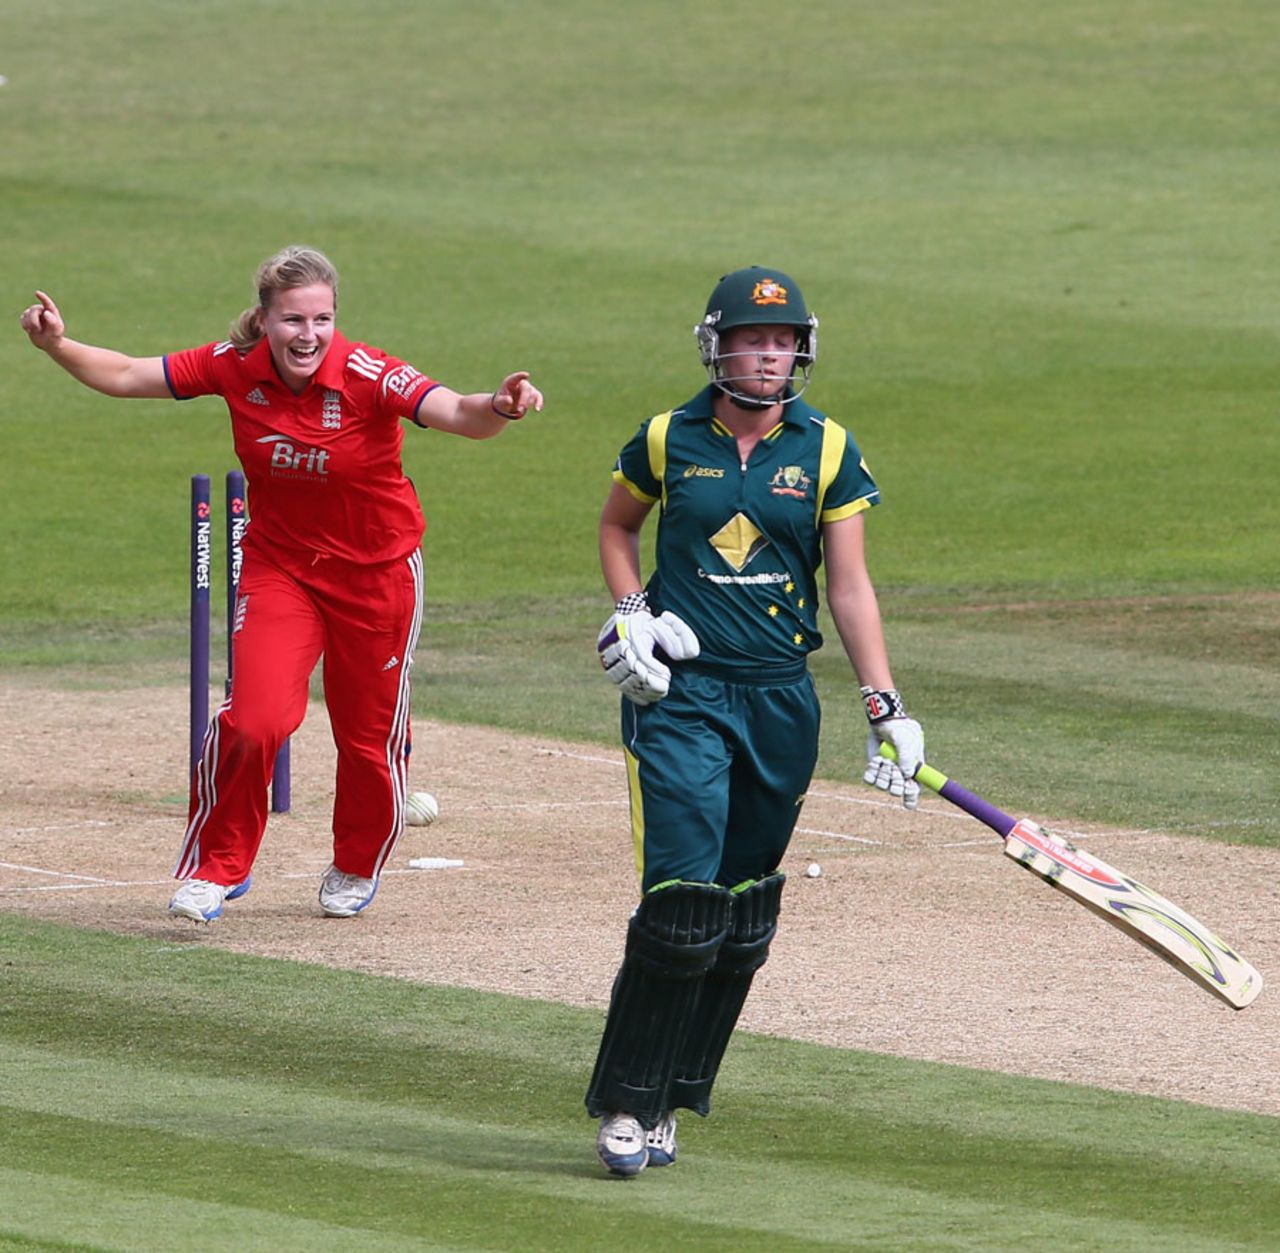 Holly Colvin run out Meg Lanning backing up, England v Australia, 2nd women's T20, Ageas Bowl, August 29, 2013